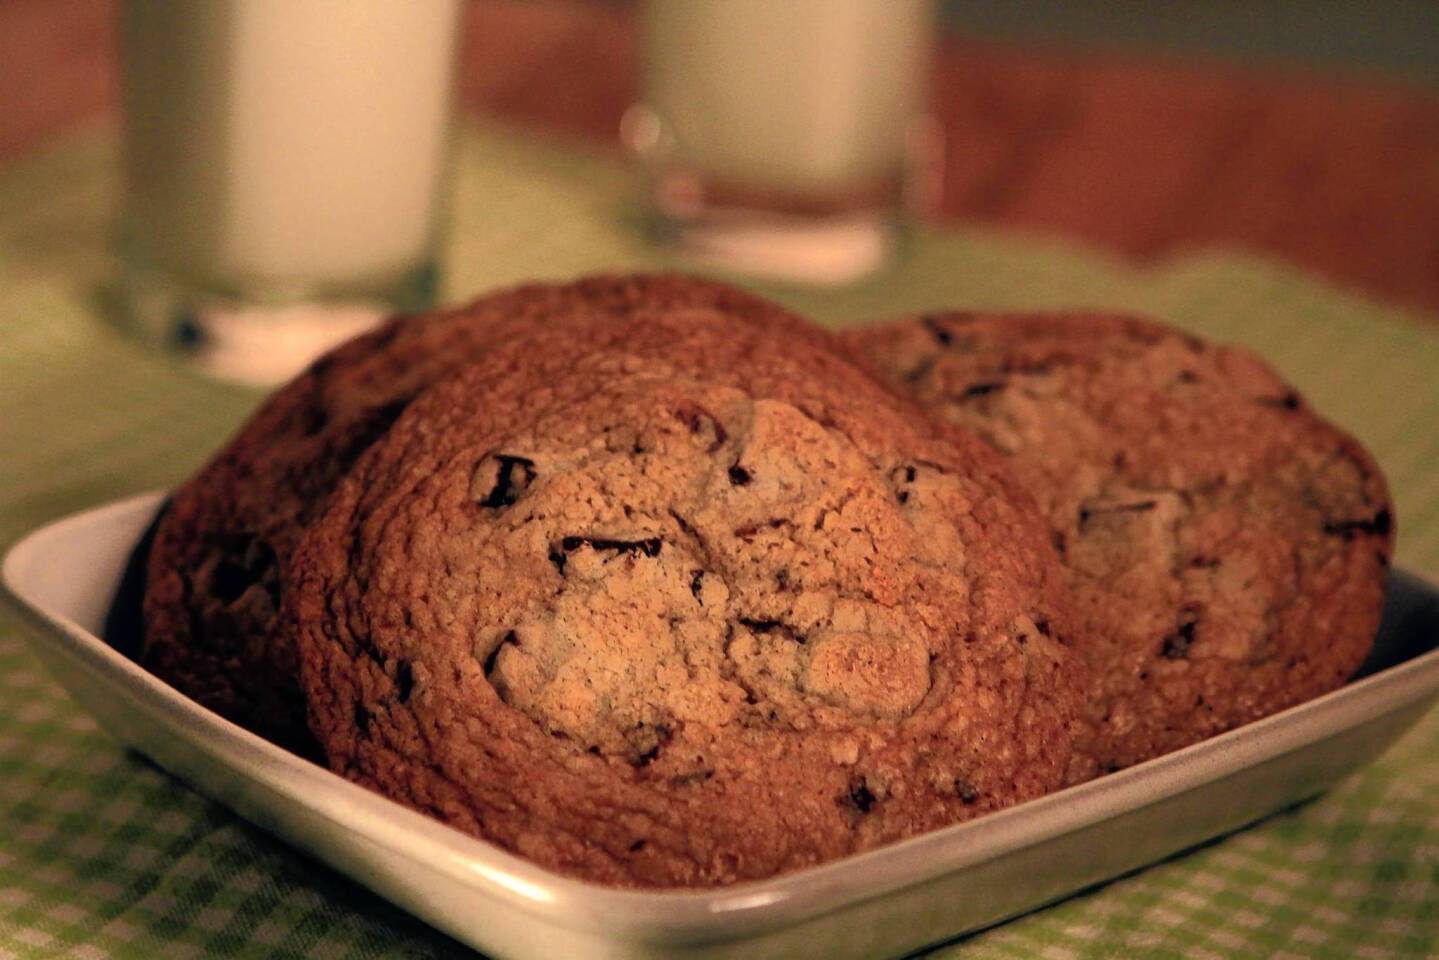 Gail's Artisan Bakery's chocolate chip cookies